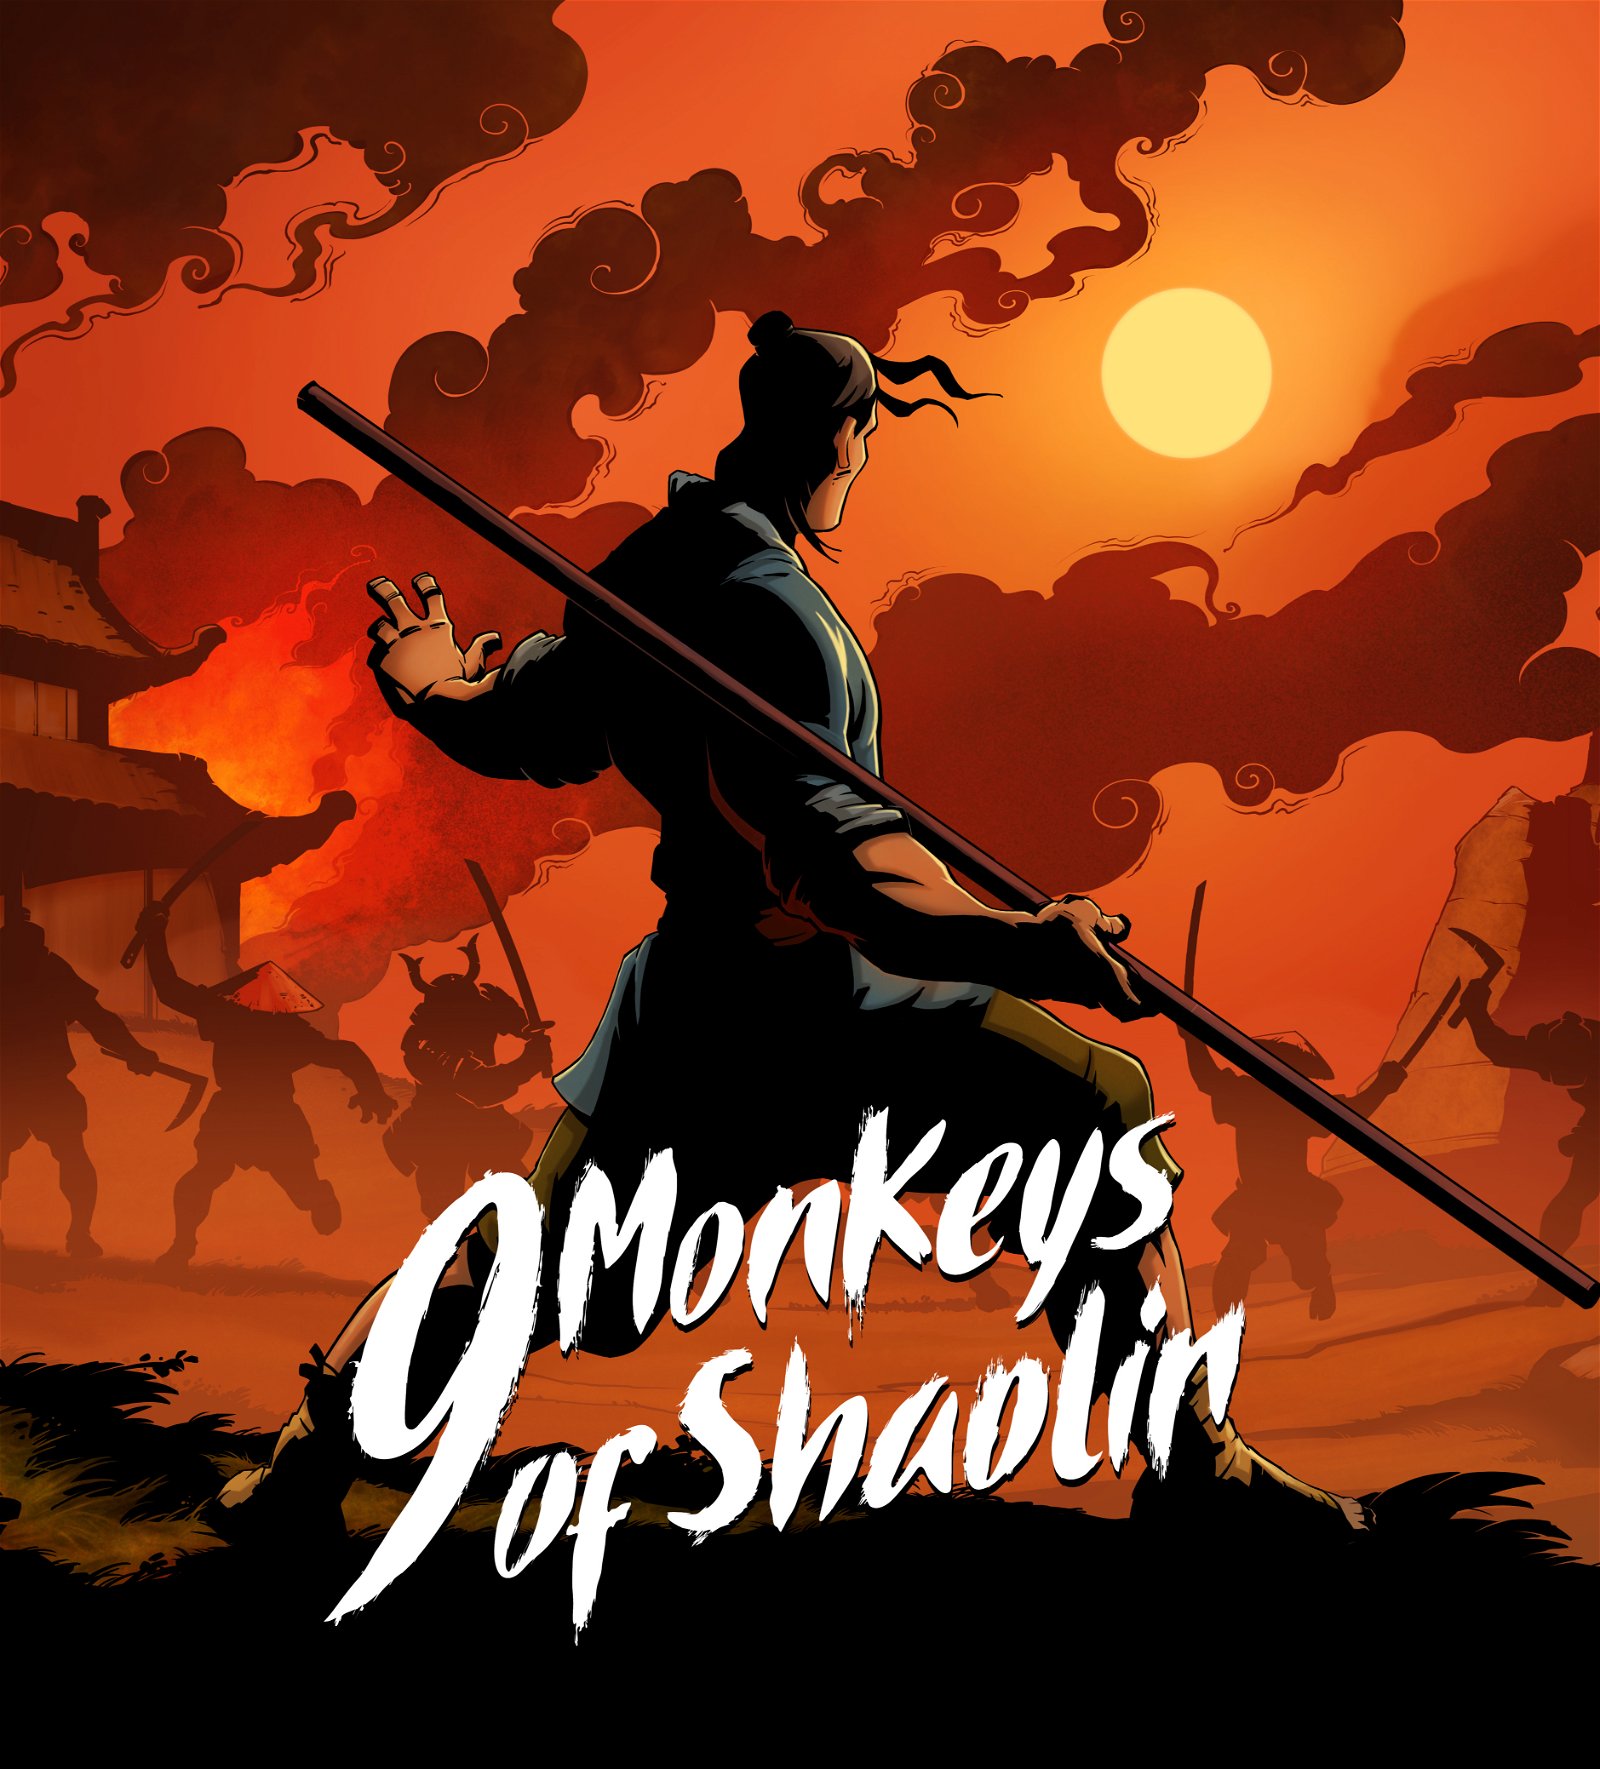 Image of 9 Monkeys of Shaolin